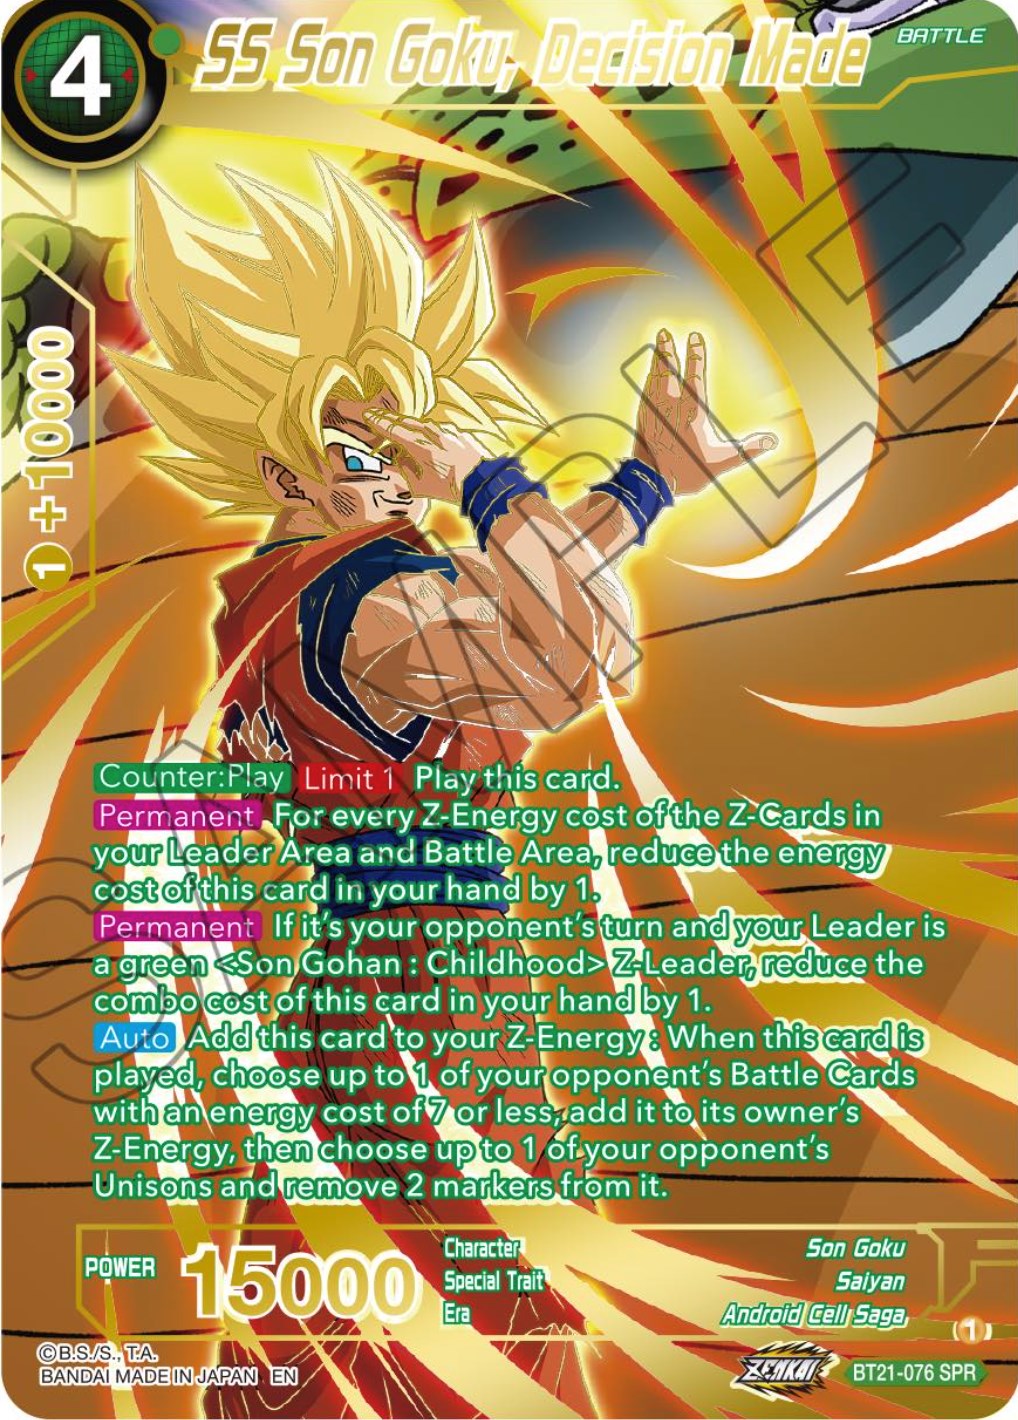 SS Son Goku, Decision Made (SPR) (BT21-076) [Wild Resurgence] | Total Play